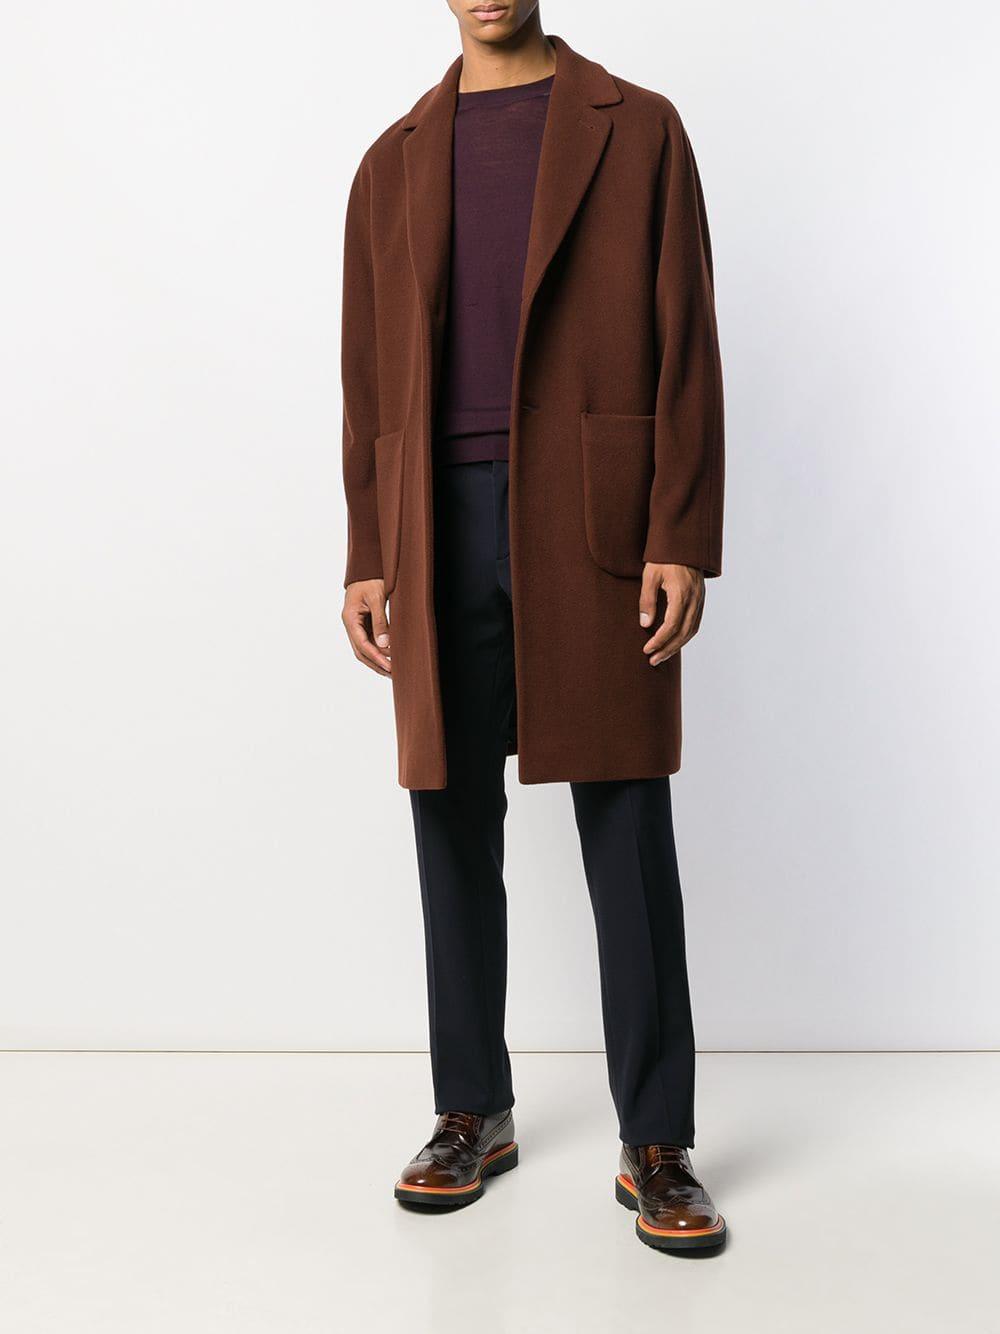 Hevò Wool Single Breasted Coat in Brown for Men - Lyst